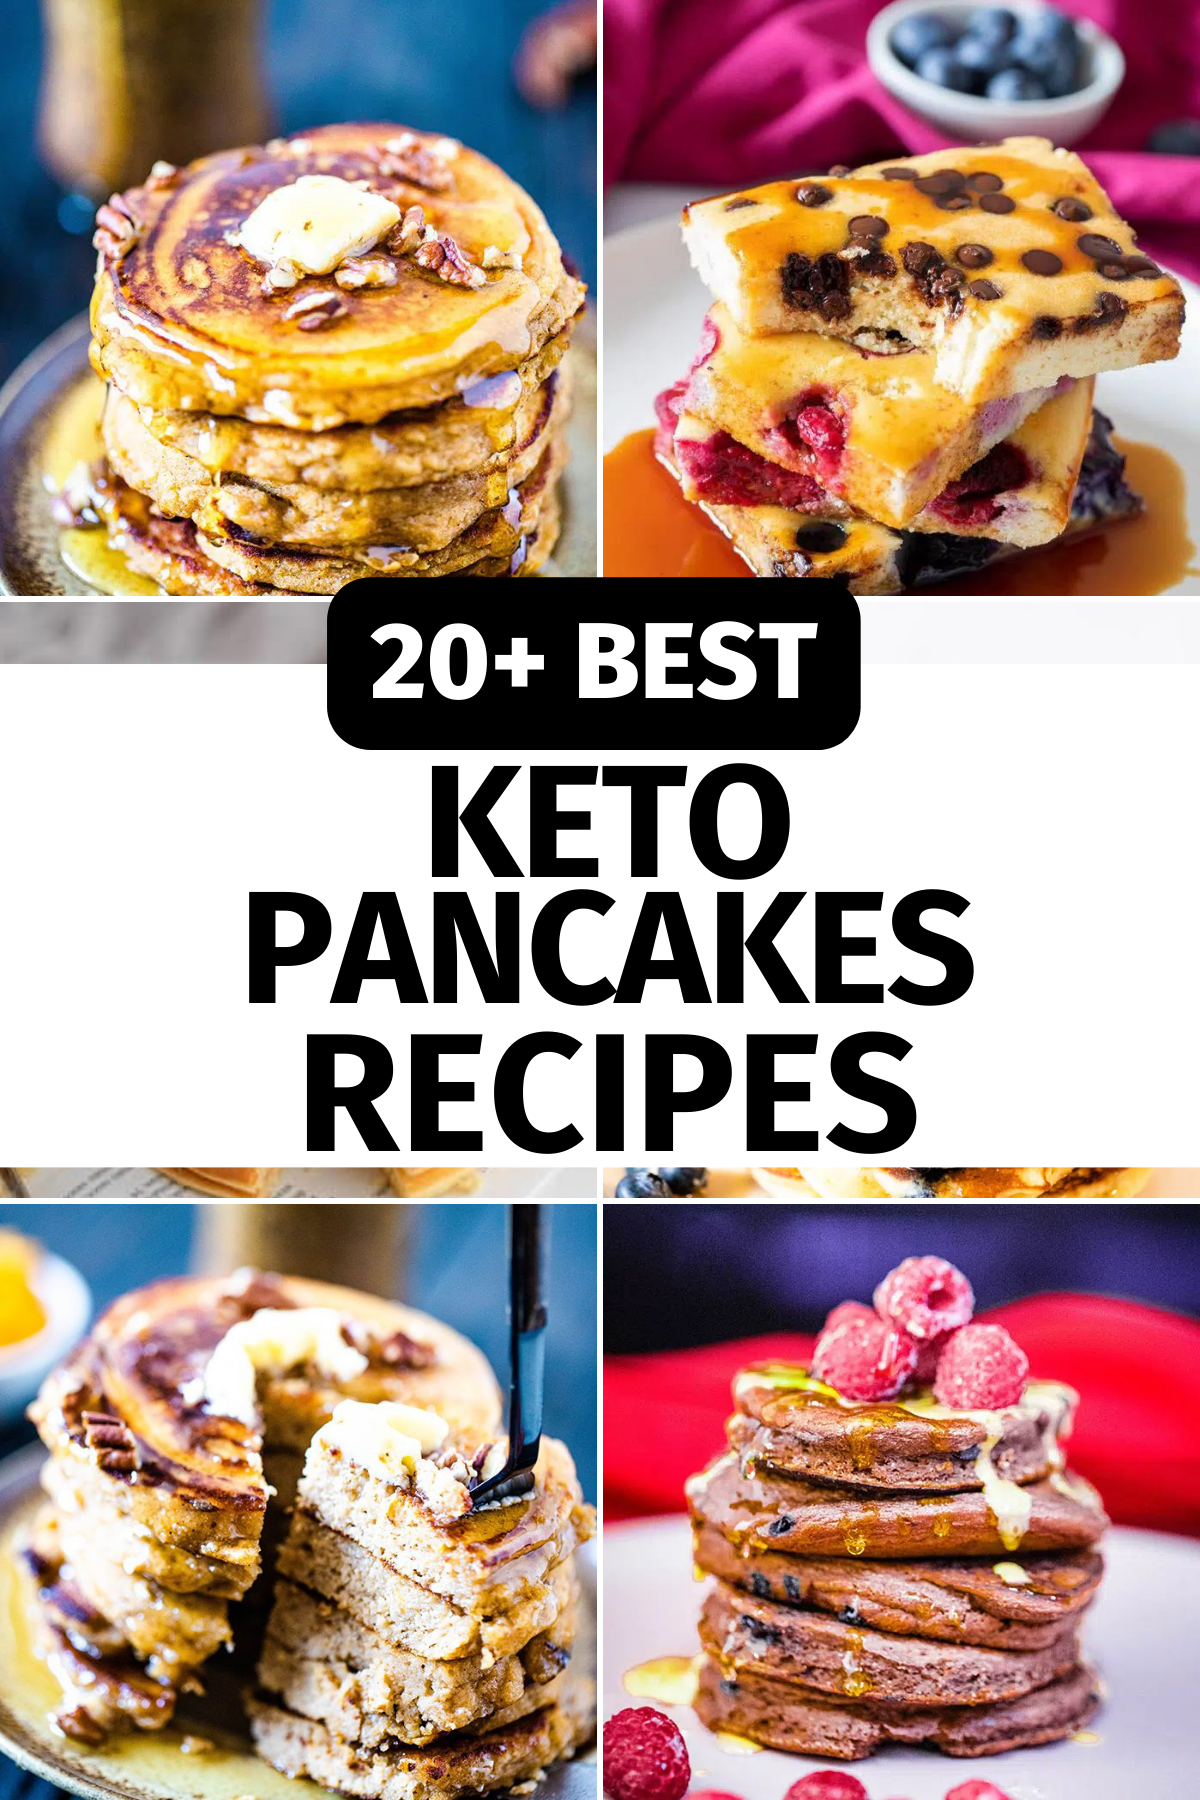 20+ best keto pancakes recipes